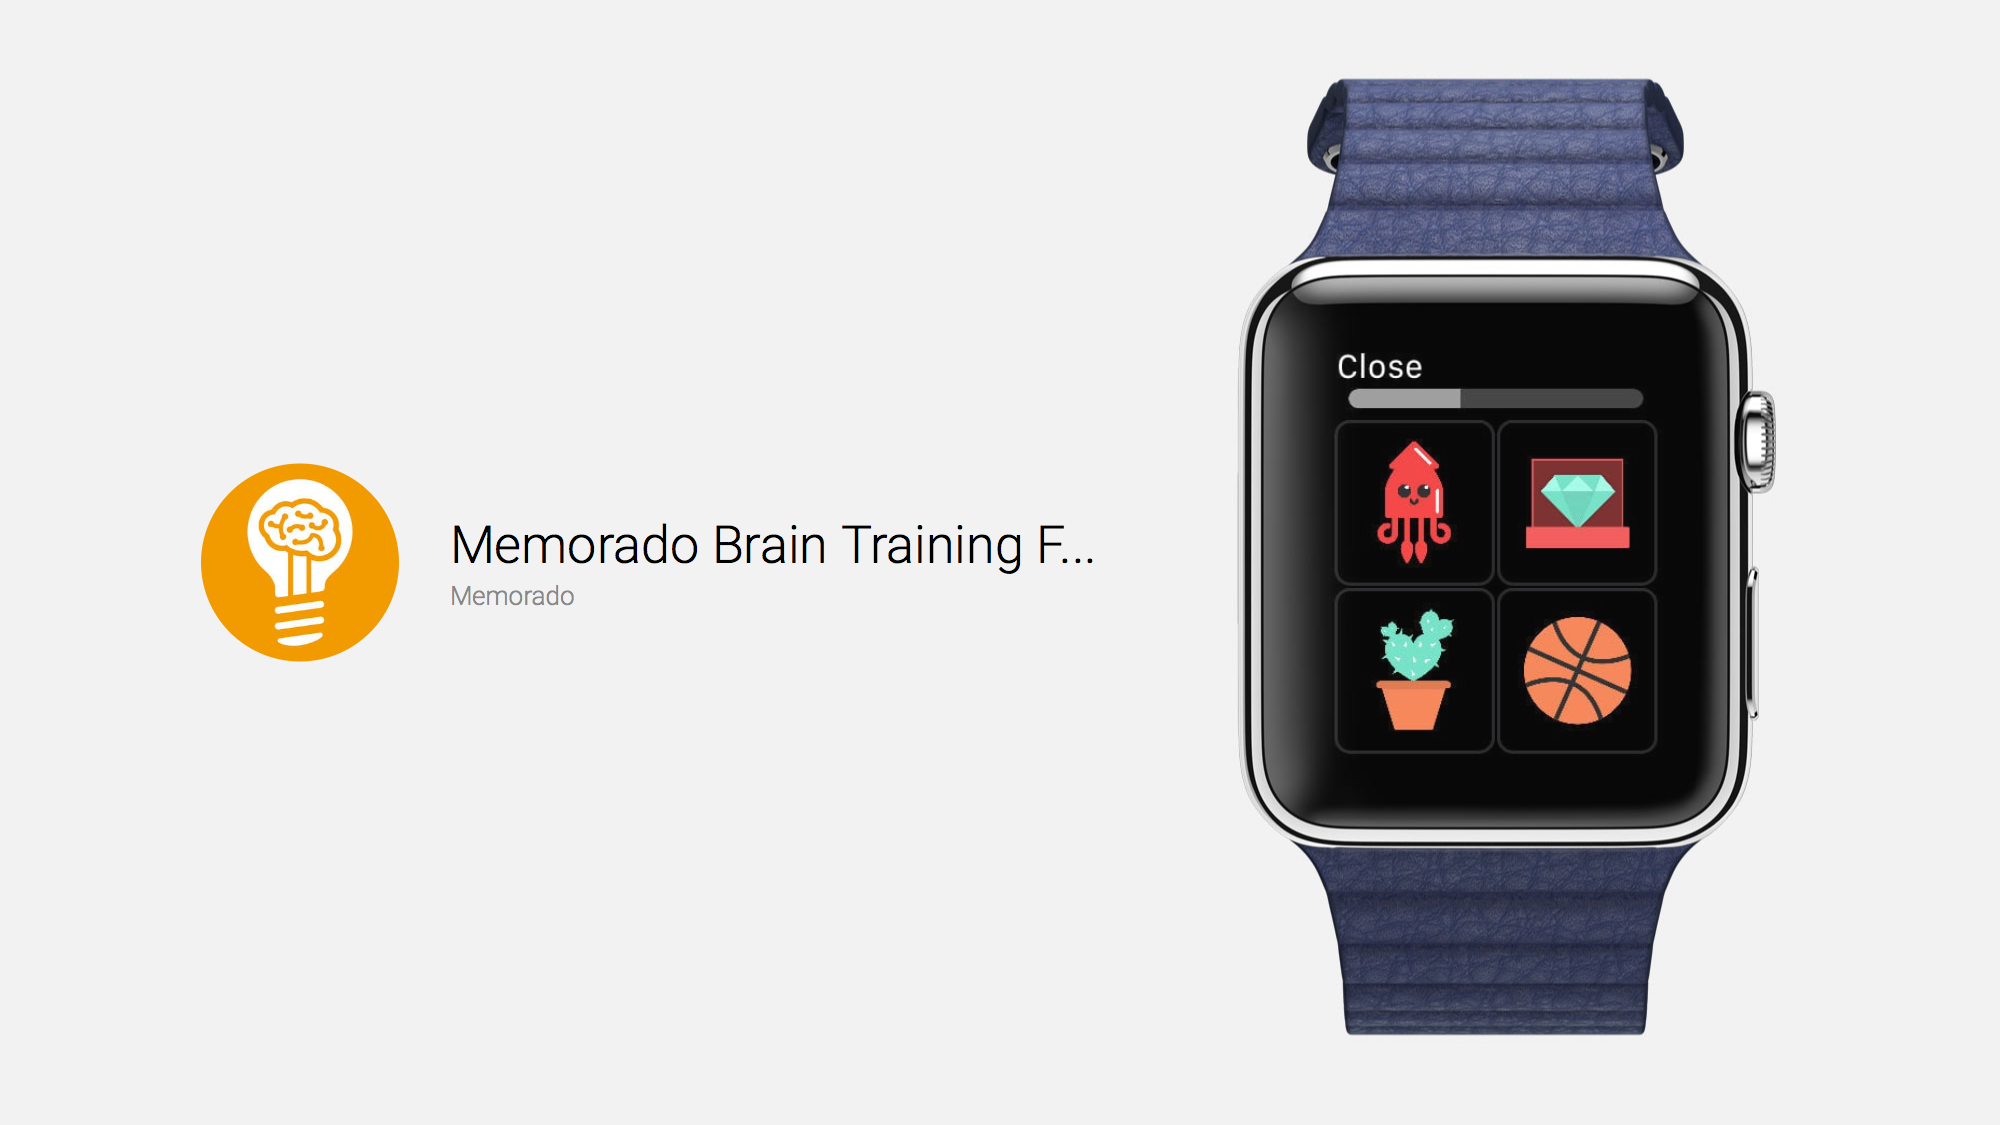 Memorado Offers Brain Training on the Apple Watch